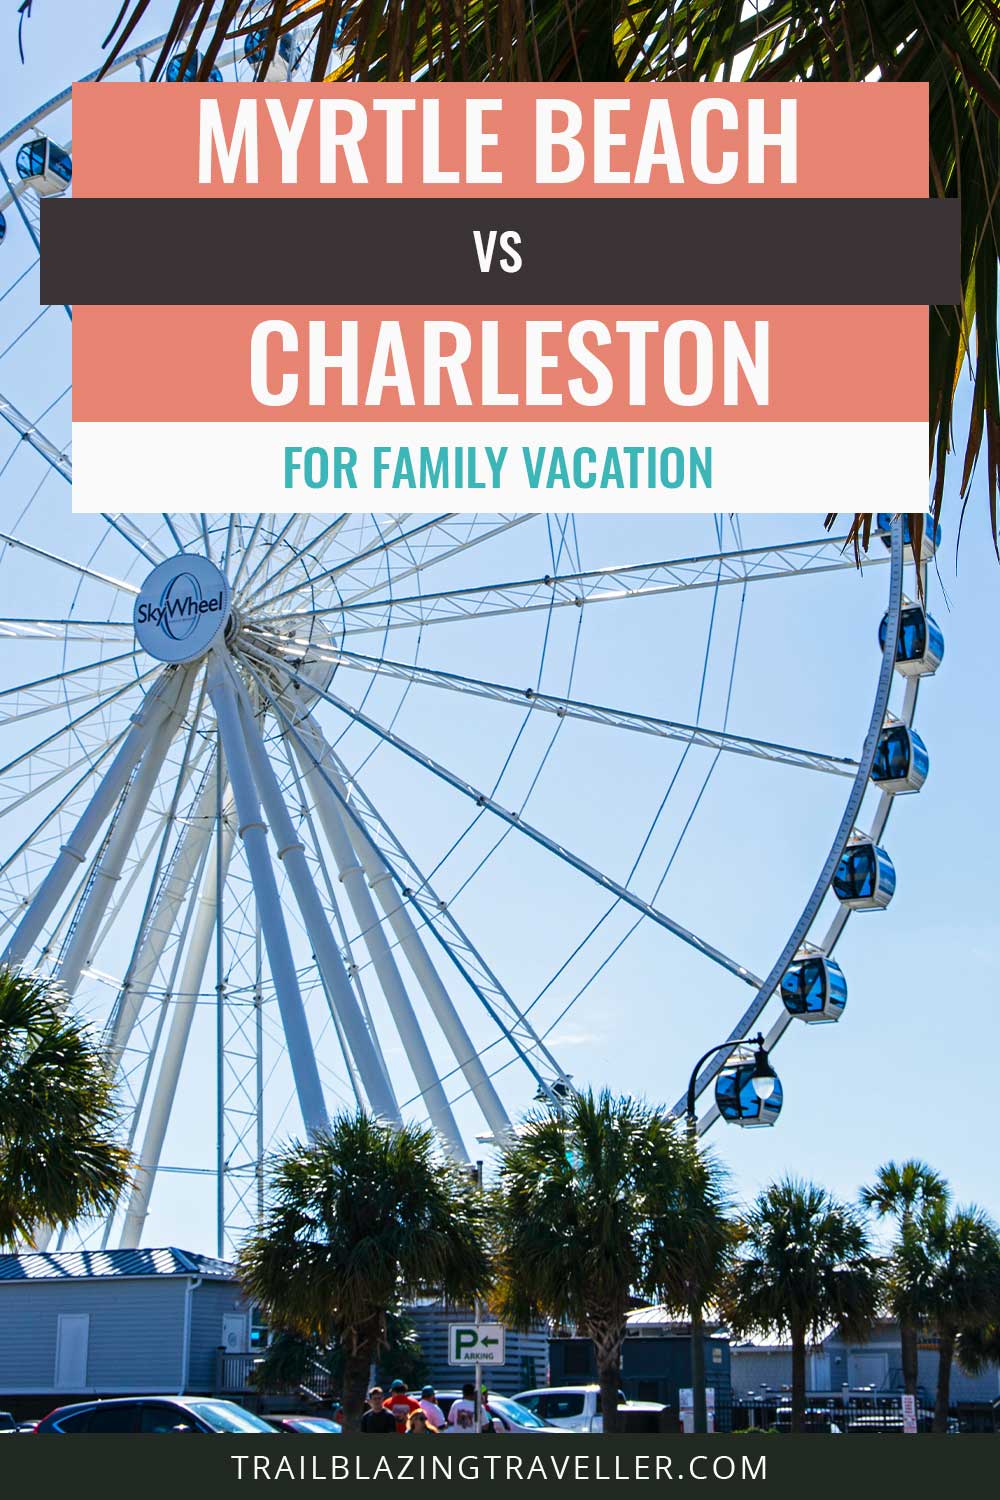 Big white ferris wheel - Myrtle Beach vs. Charleston for Family Vacation.